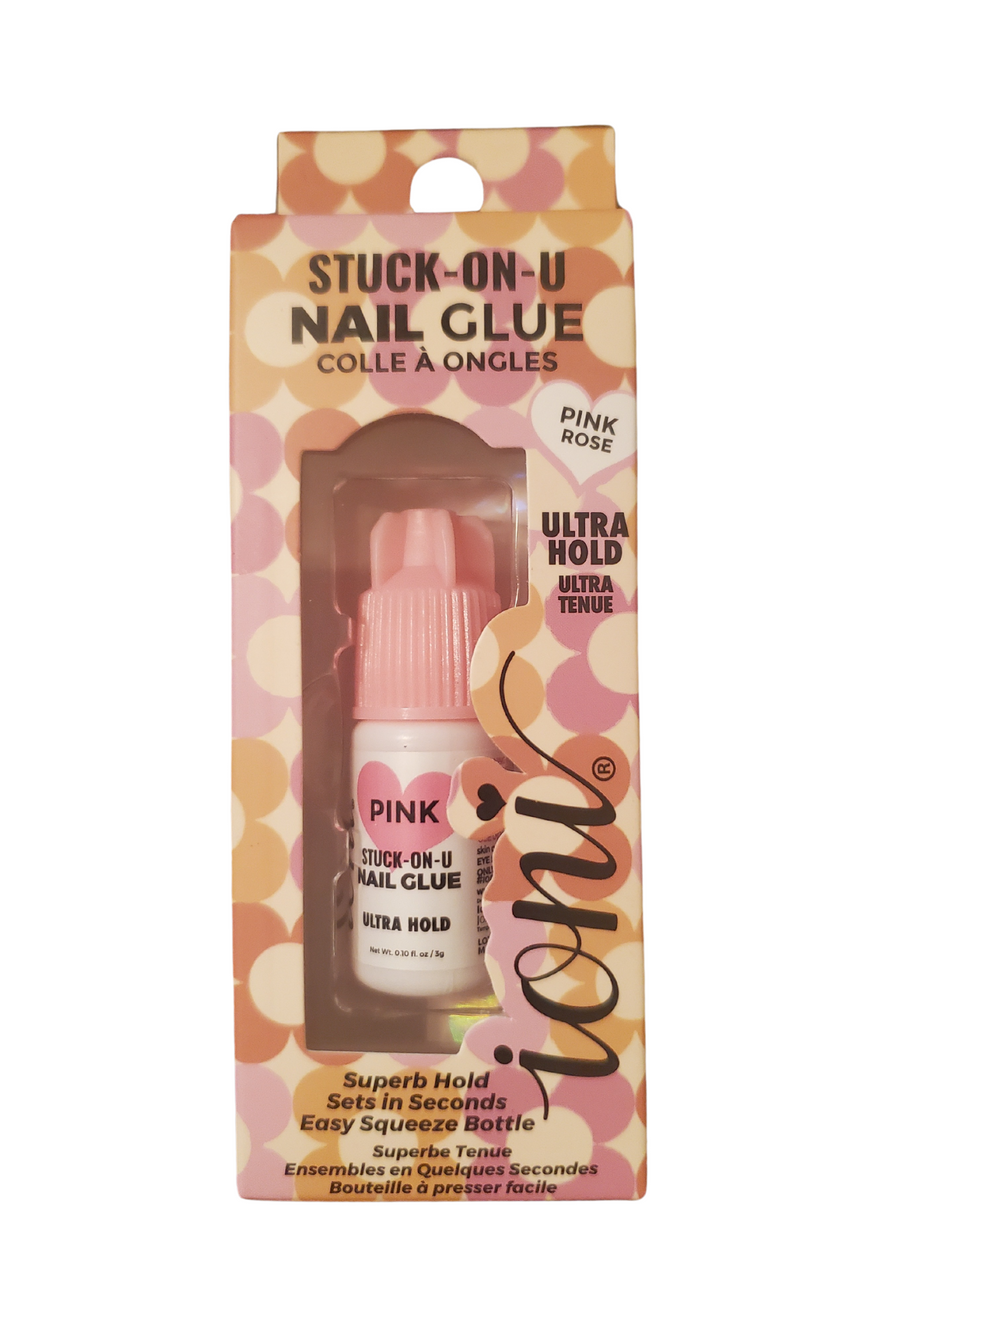 Stuck-on-u nail glue ultra hold pink